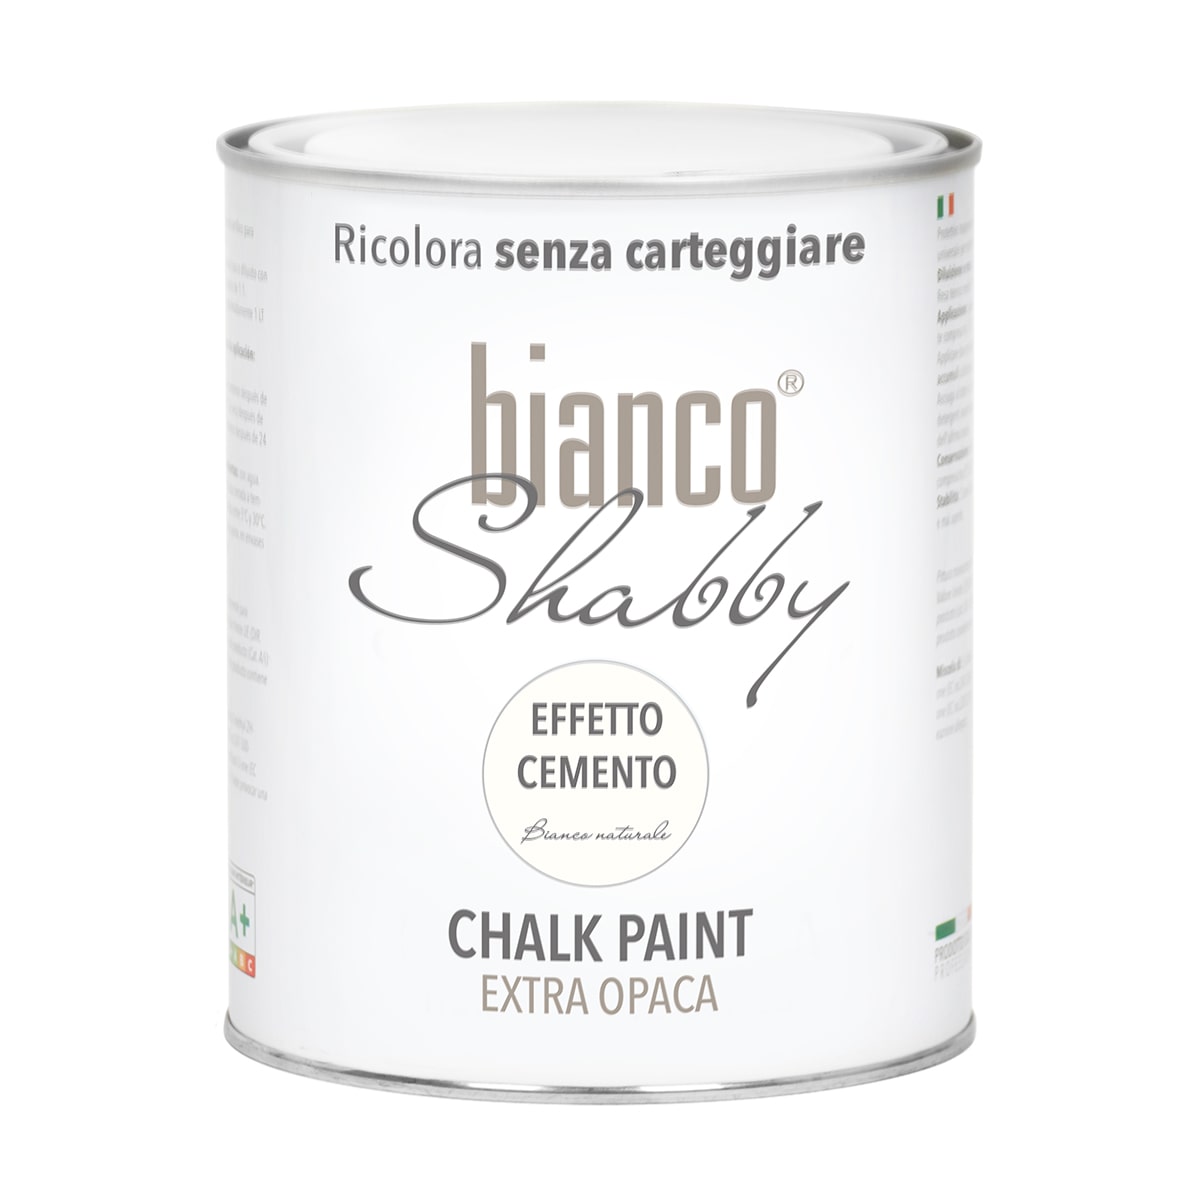 Chalk Paint Industrial Effetto Cemento Bianco Naturale - biancoShabby®